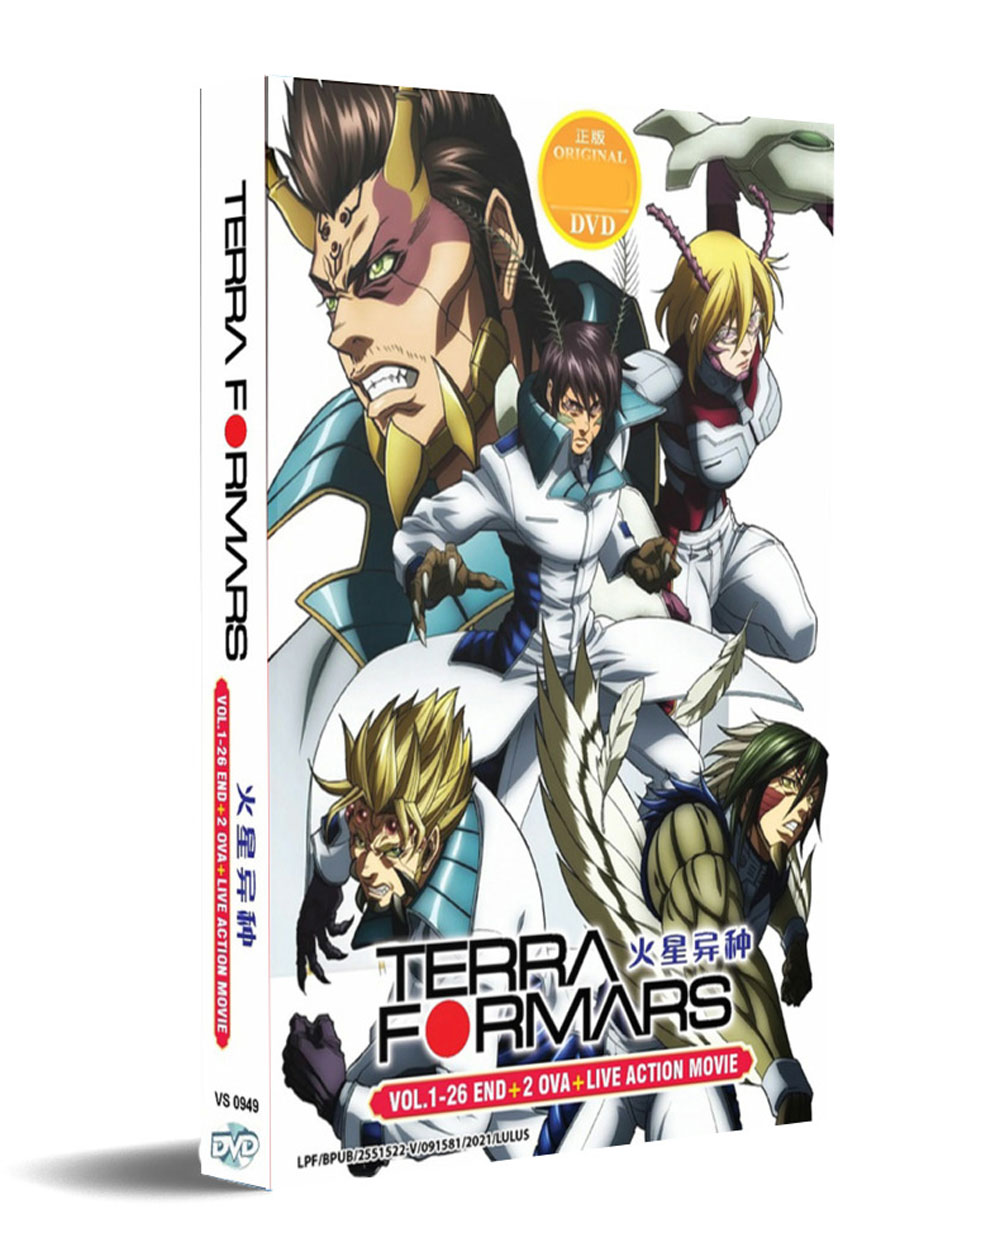 Terra Formars +2OVA + Live Action Movie (DVD) (2014-2018) Anime